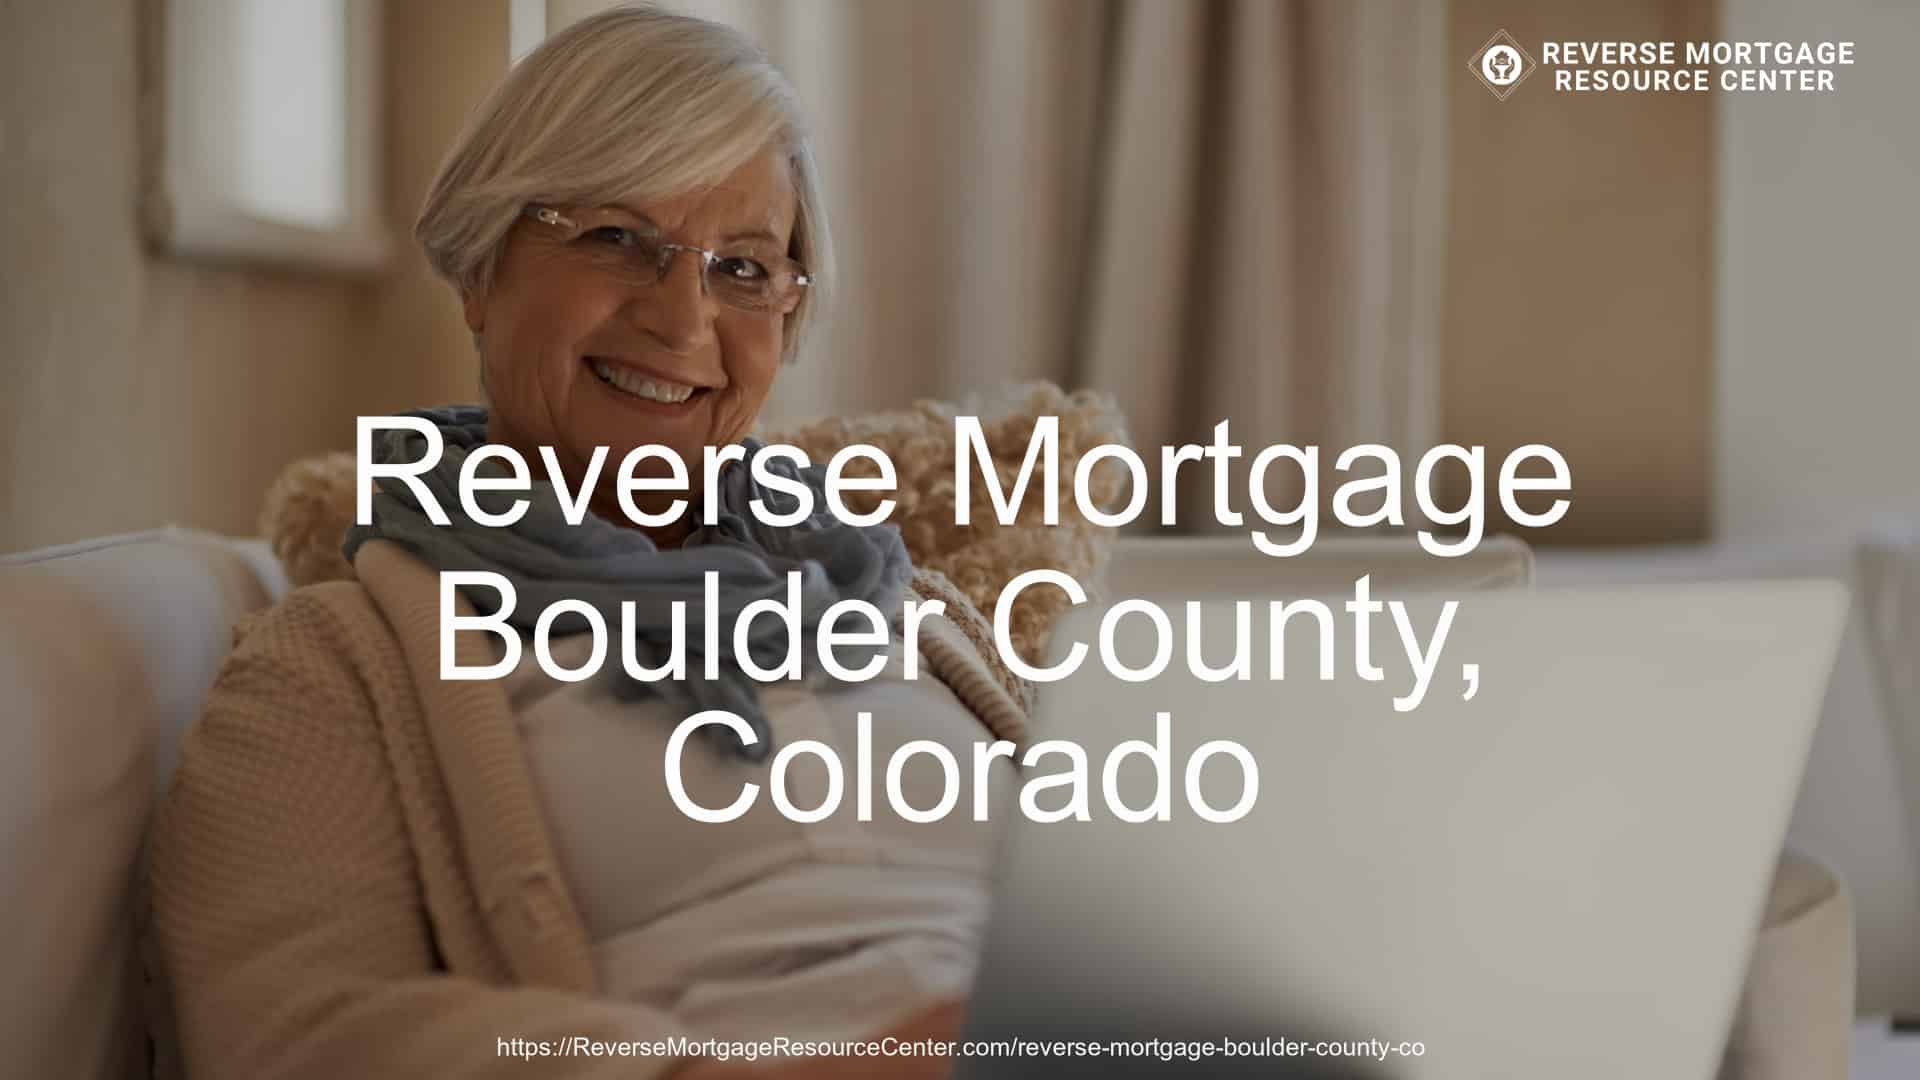 Reverse Mortgage Loans in Boulder County Colorado